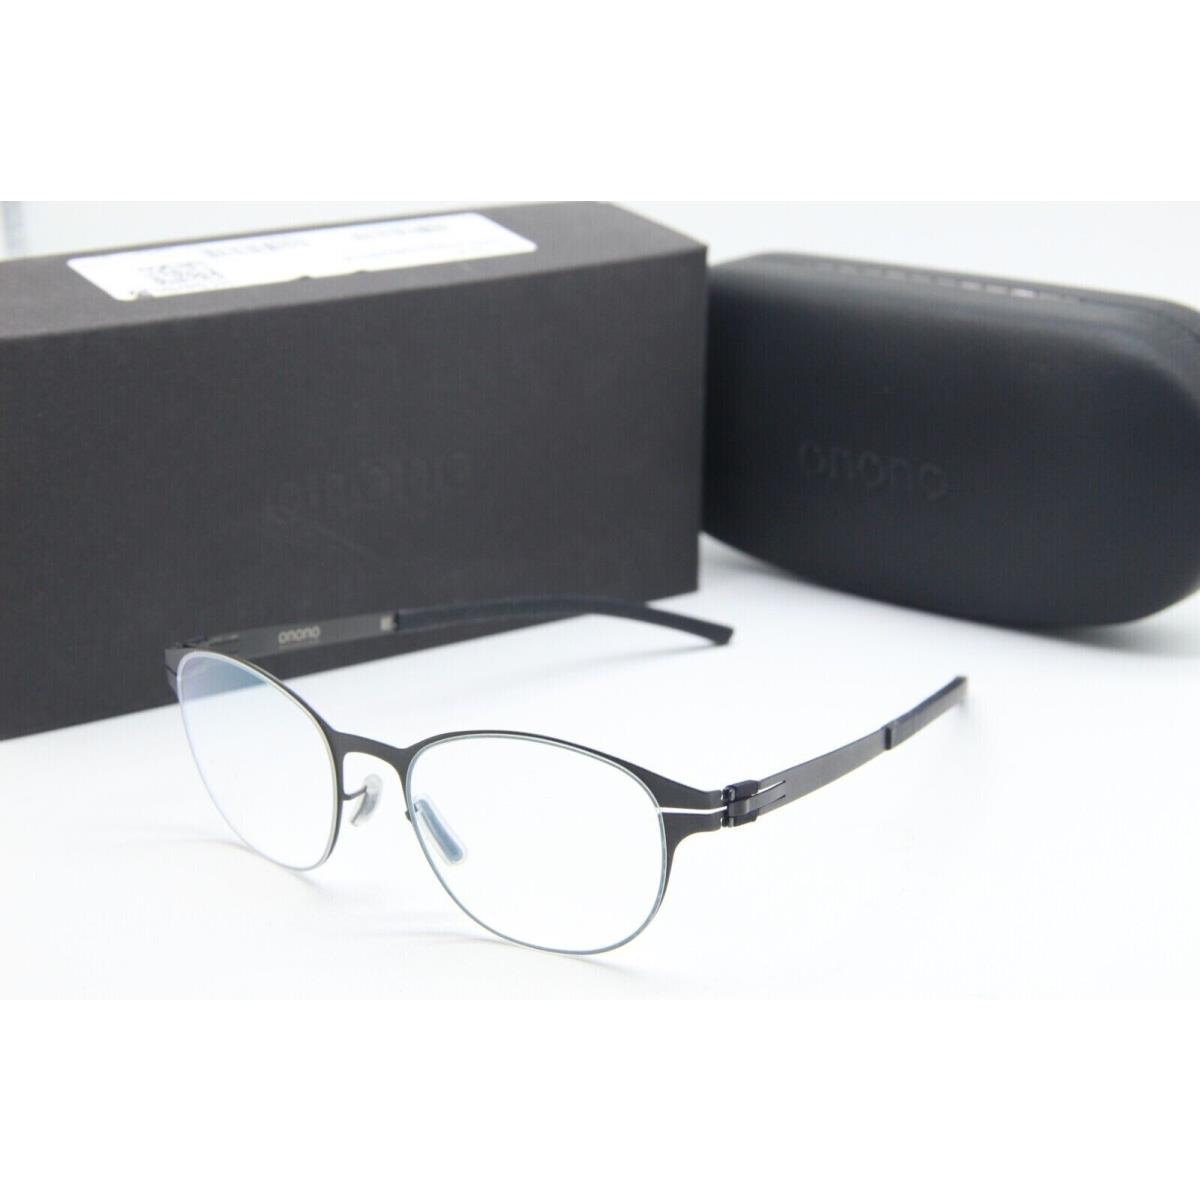 IC Berlin Model Onono T01-16-4 Tt-black Frames Eyeglasses 48-19